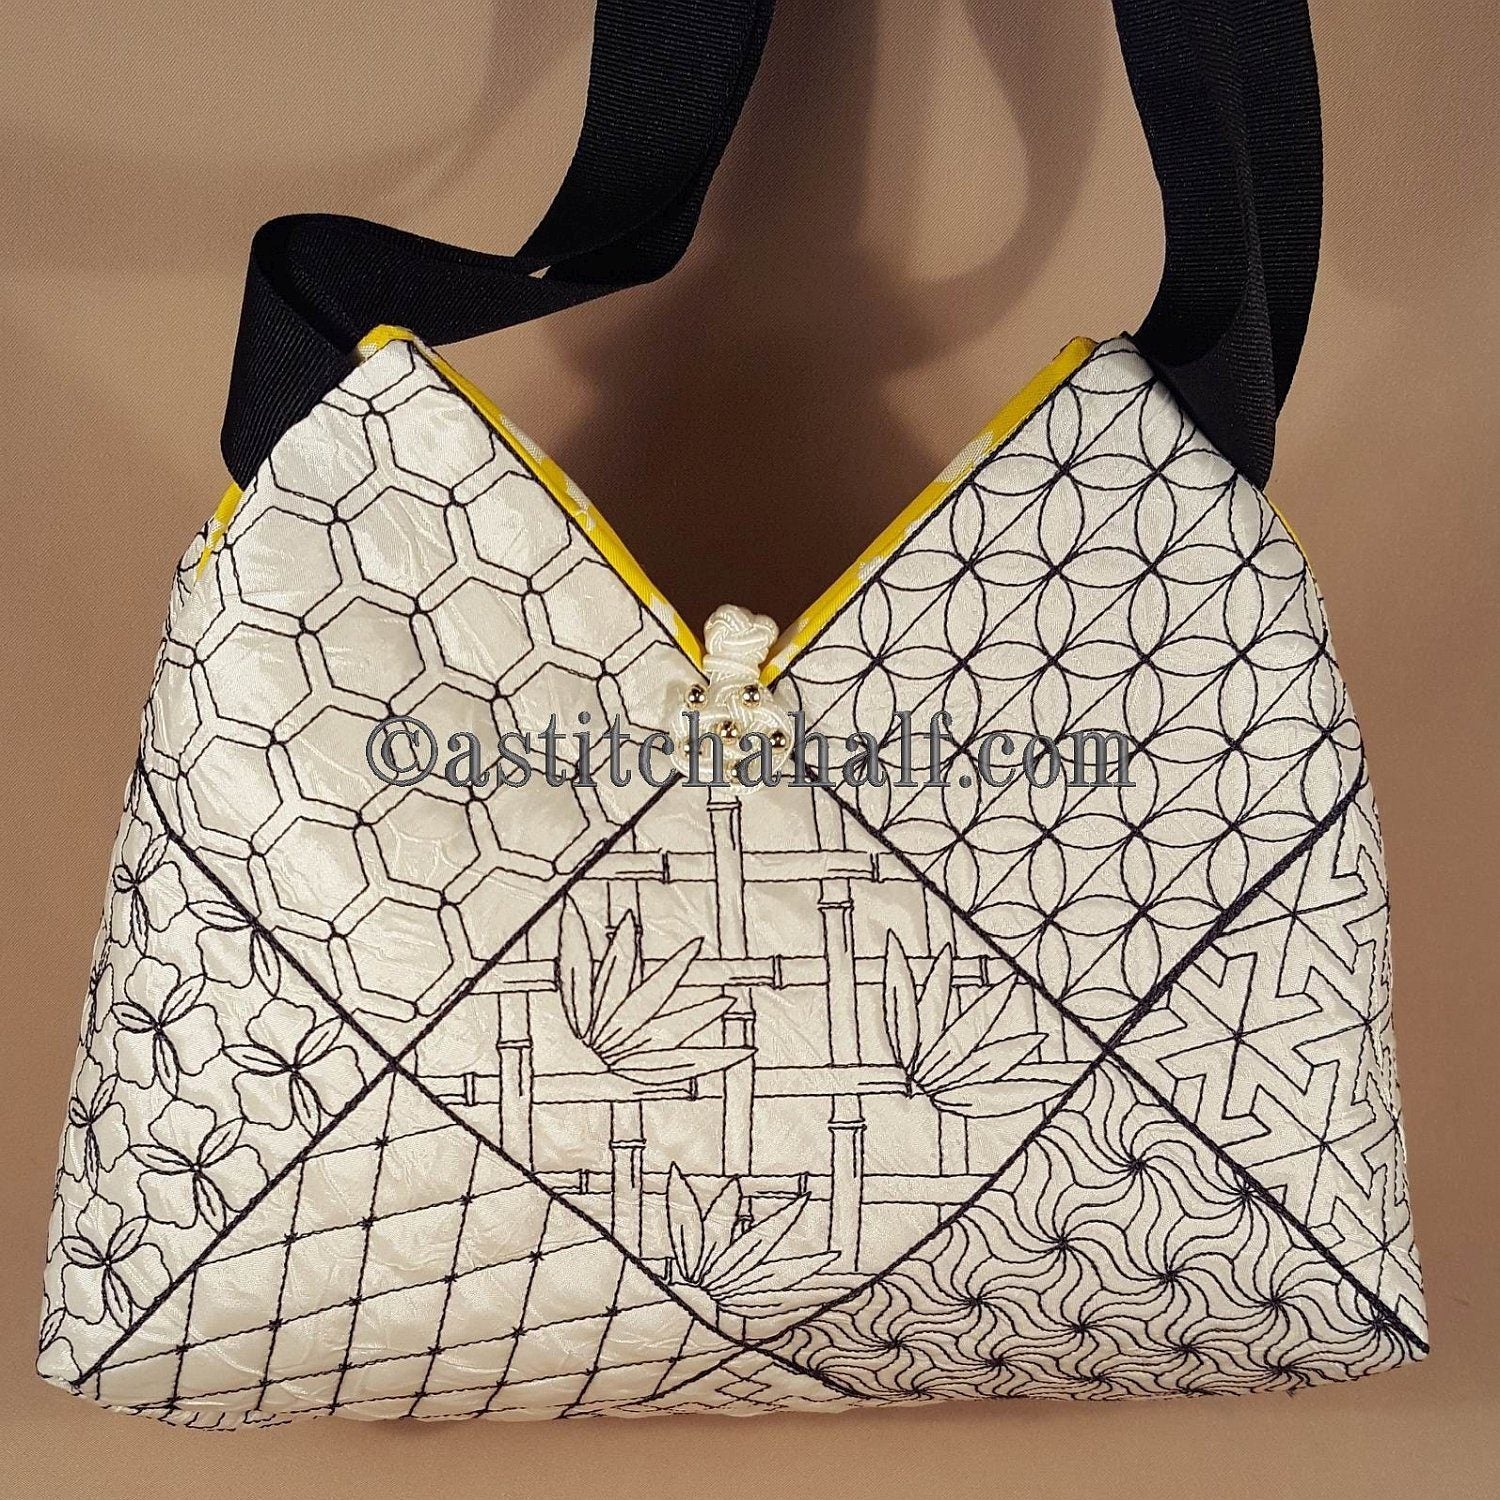 Kikko Sashiko Quilt Blocks and Tote Bag